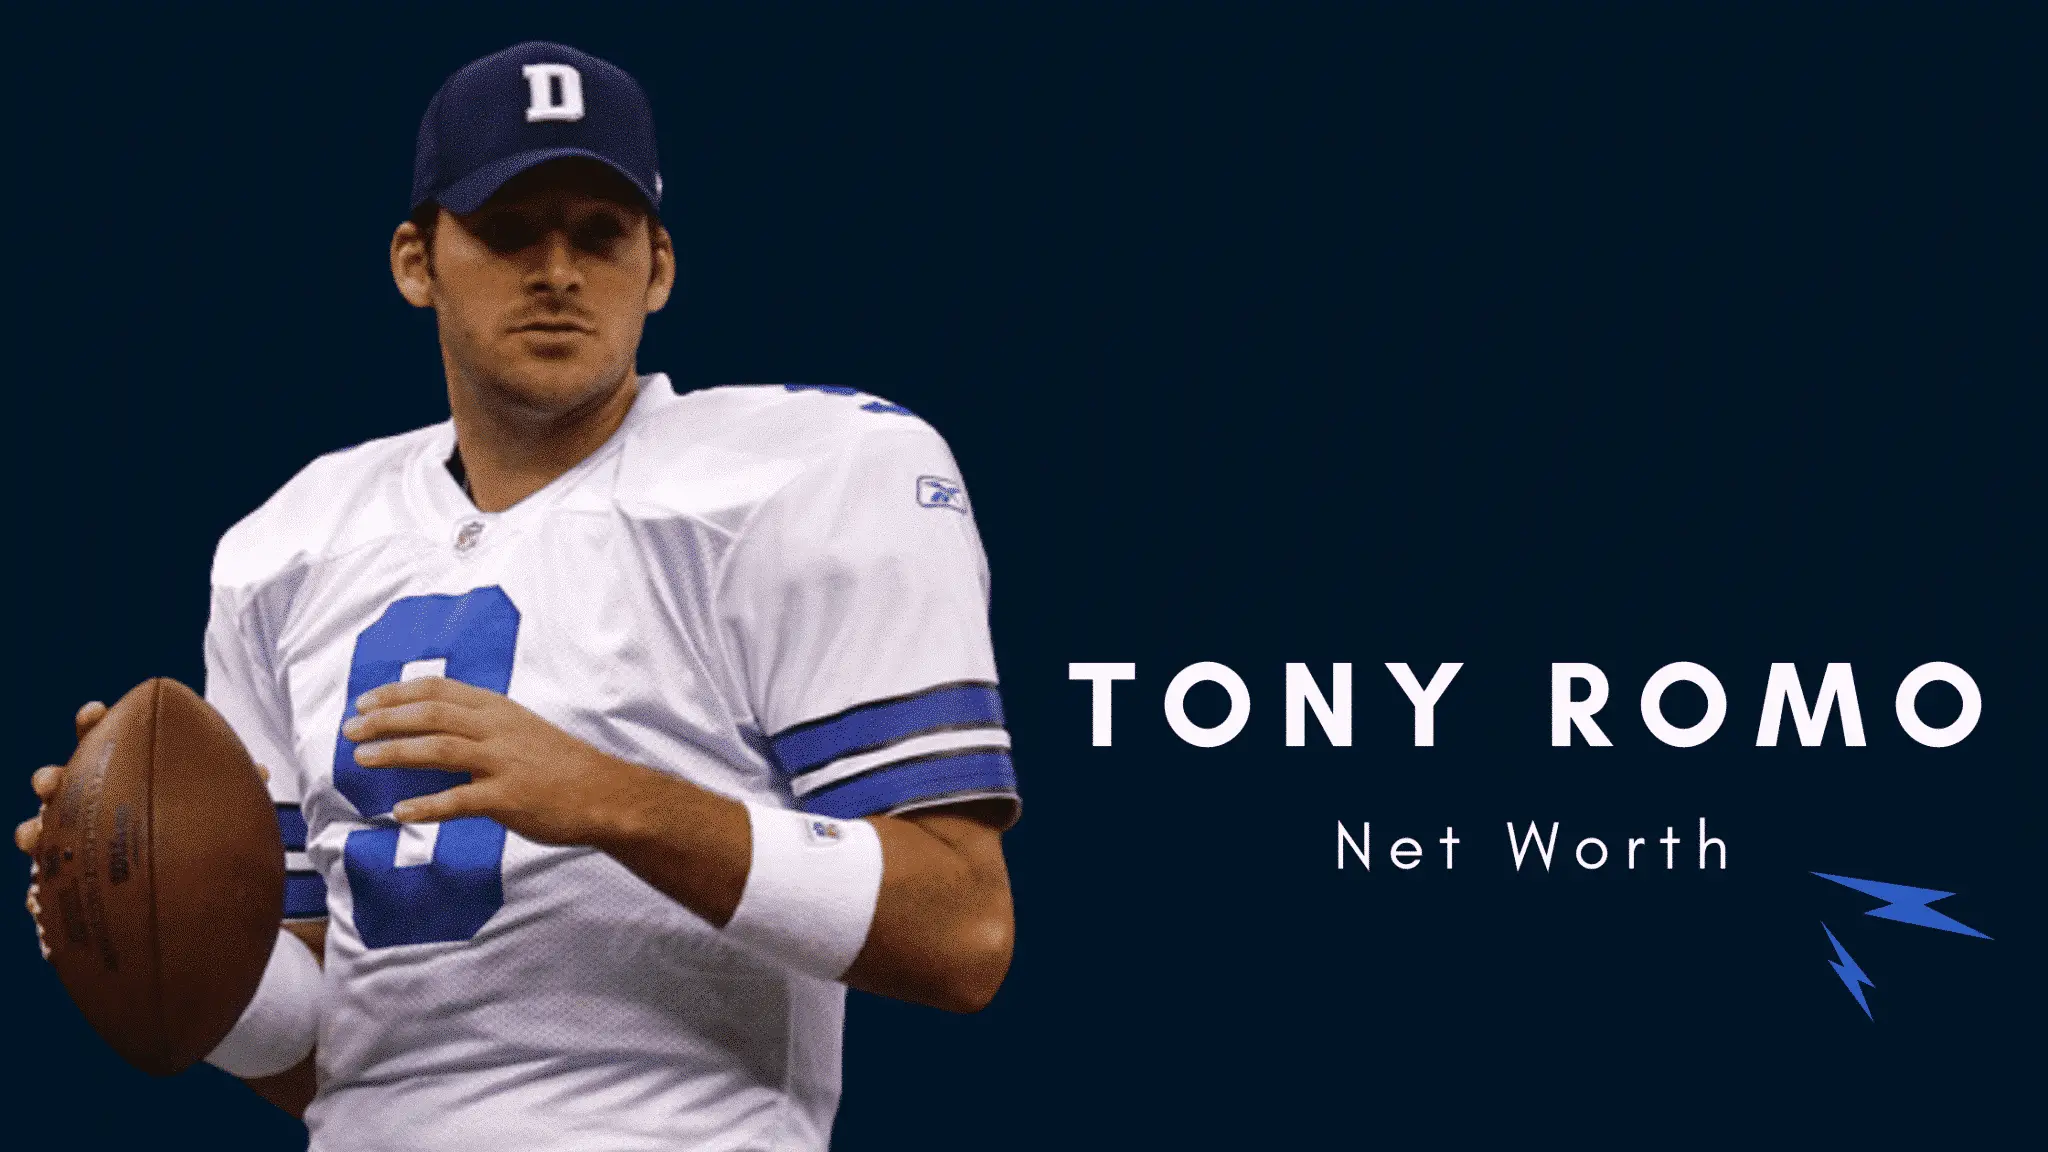 Tony Romo Net Worth – Fortune of an American Football Quarterback